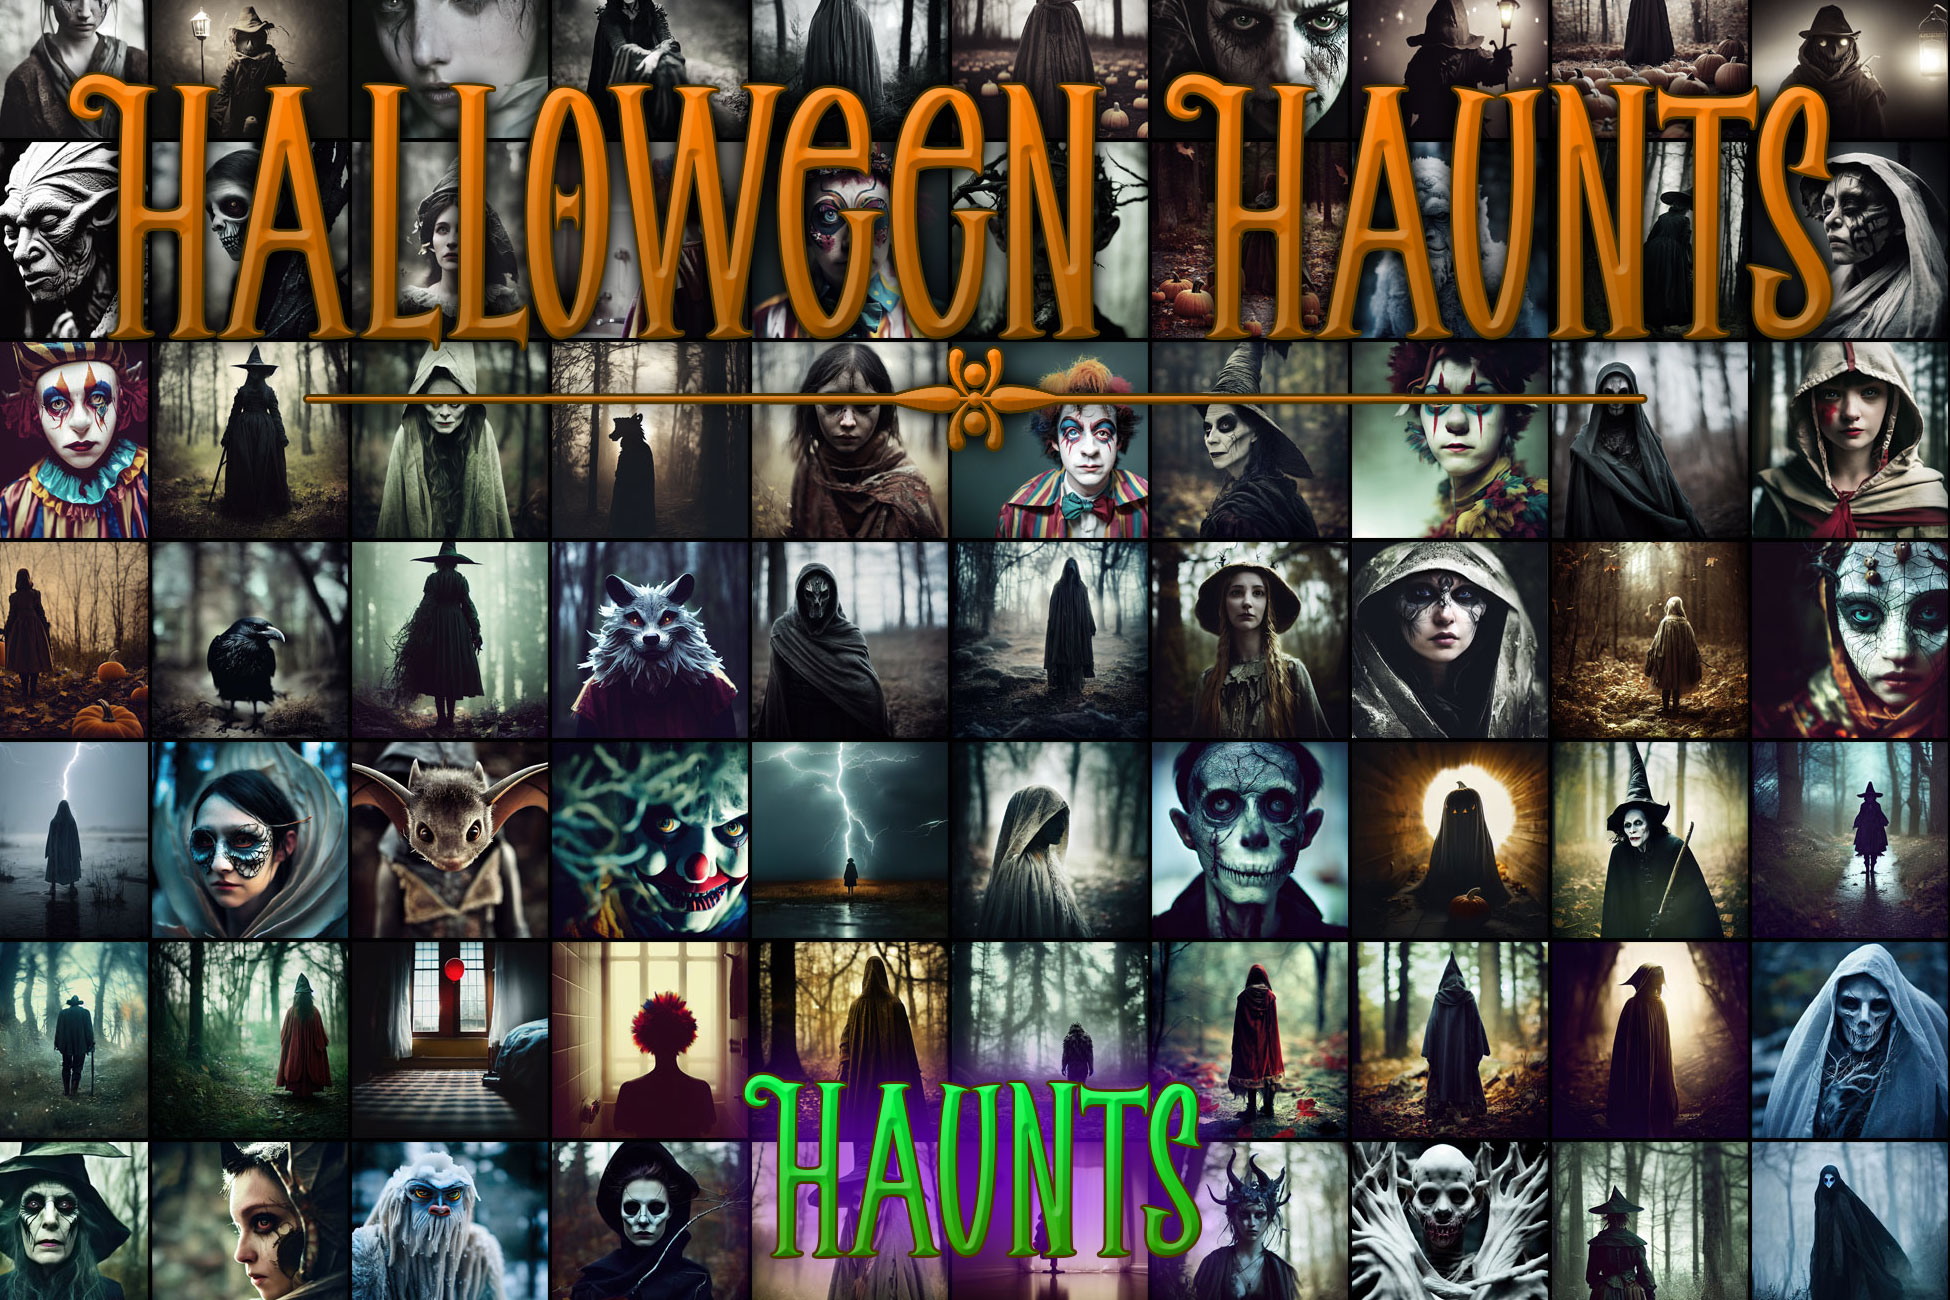 Halloween Haunts - Haunts Icon Pack for RPG / Fantasy / Realistic Games